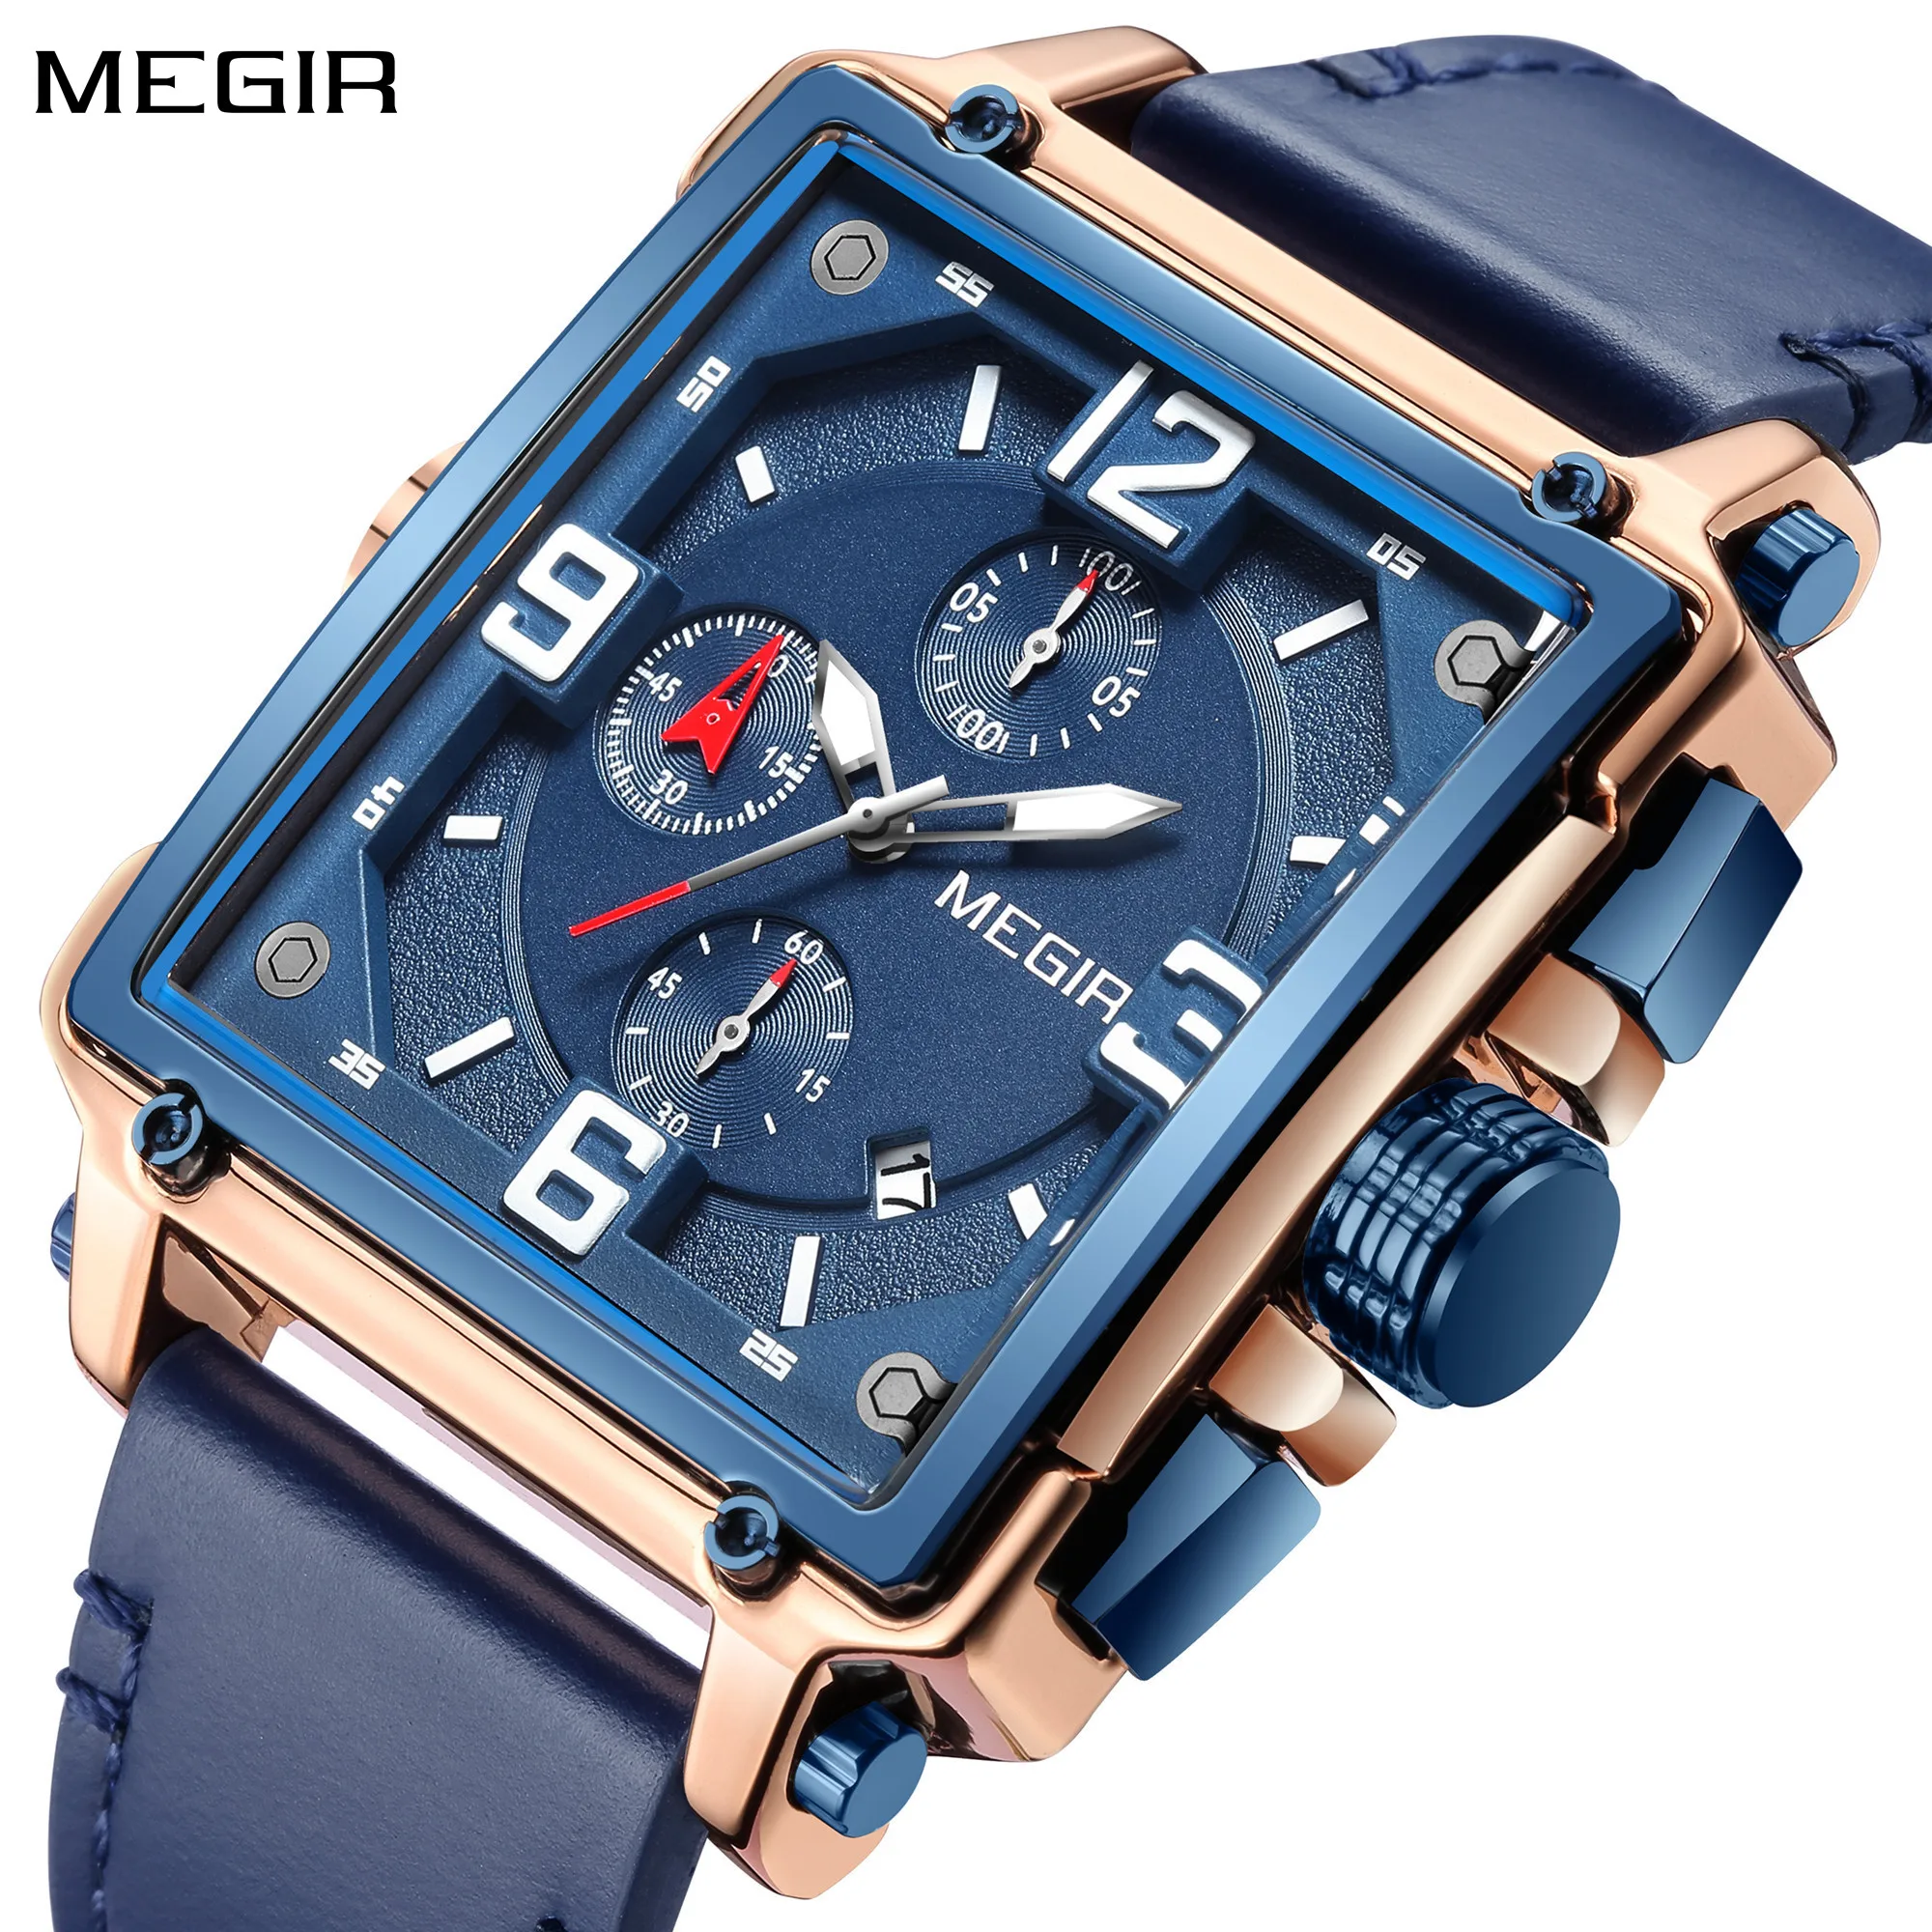 

MEGIR Top Brand Watches for Men Waterproof Leather Quartz Wrist Watch Luminous Chronograph Date Calendar Men Clock Reloj Hombre